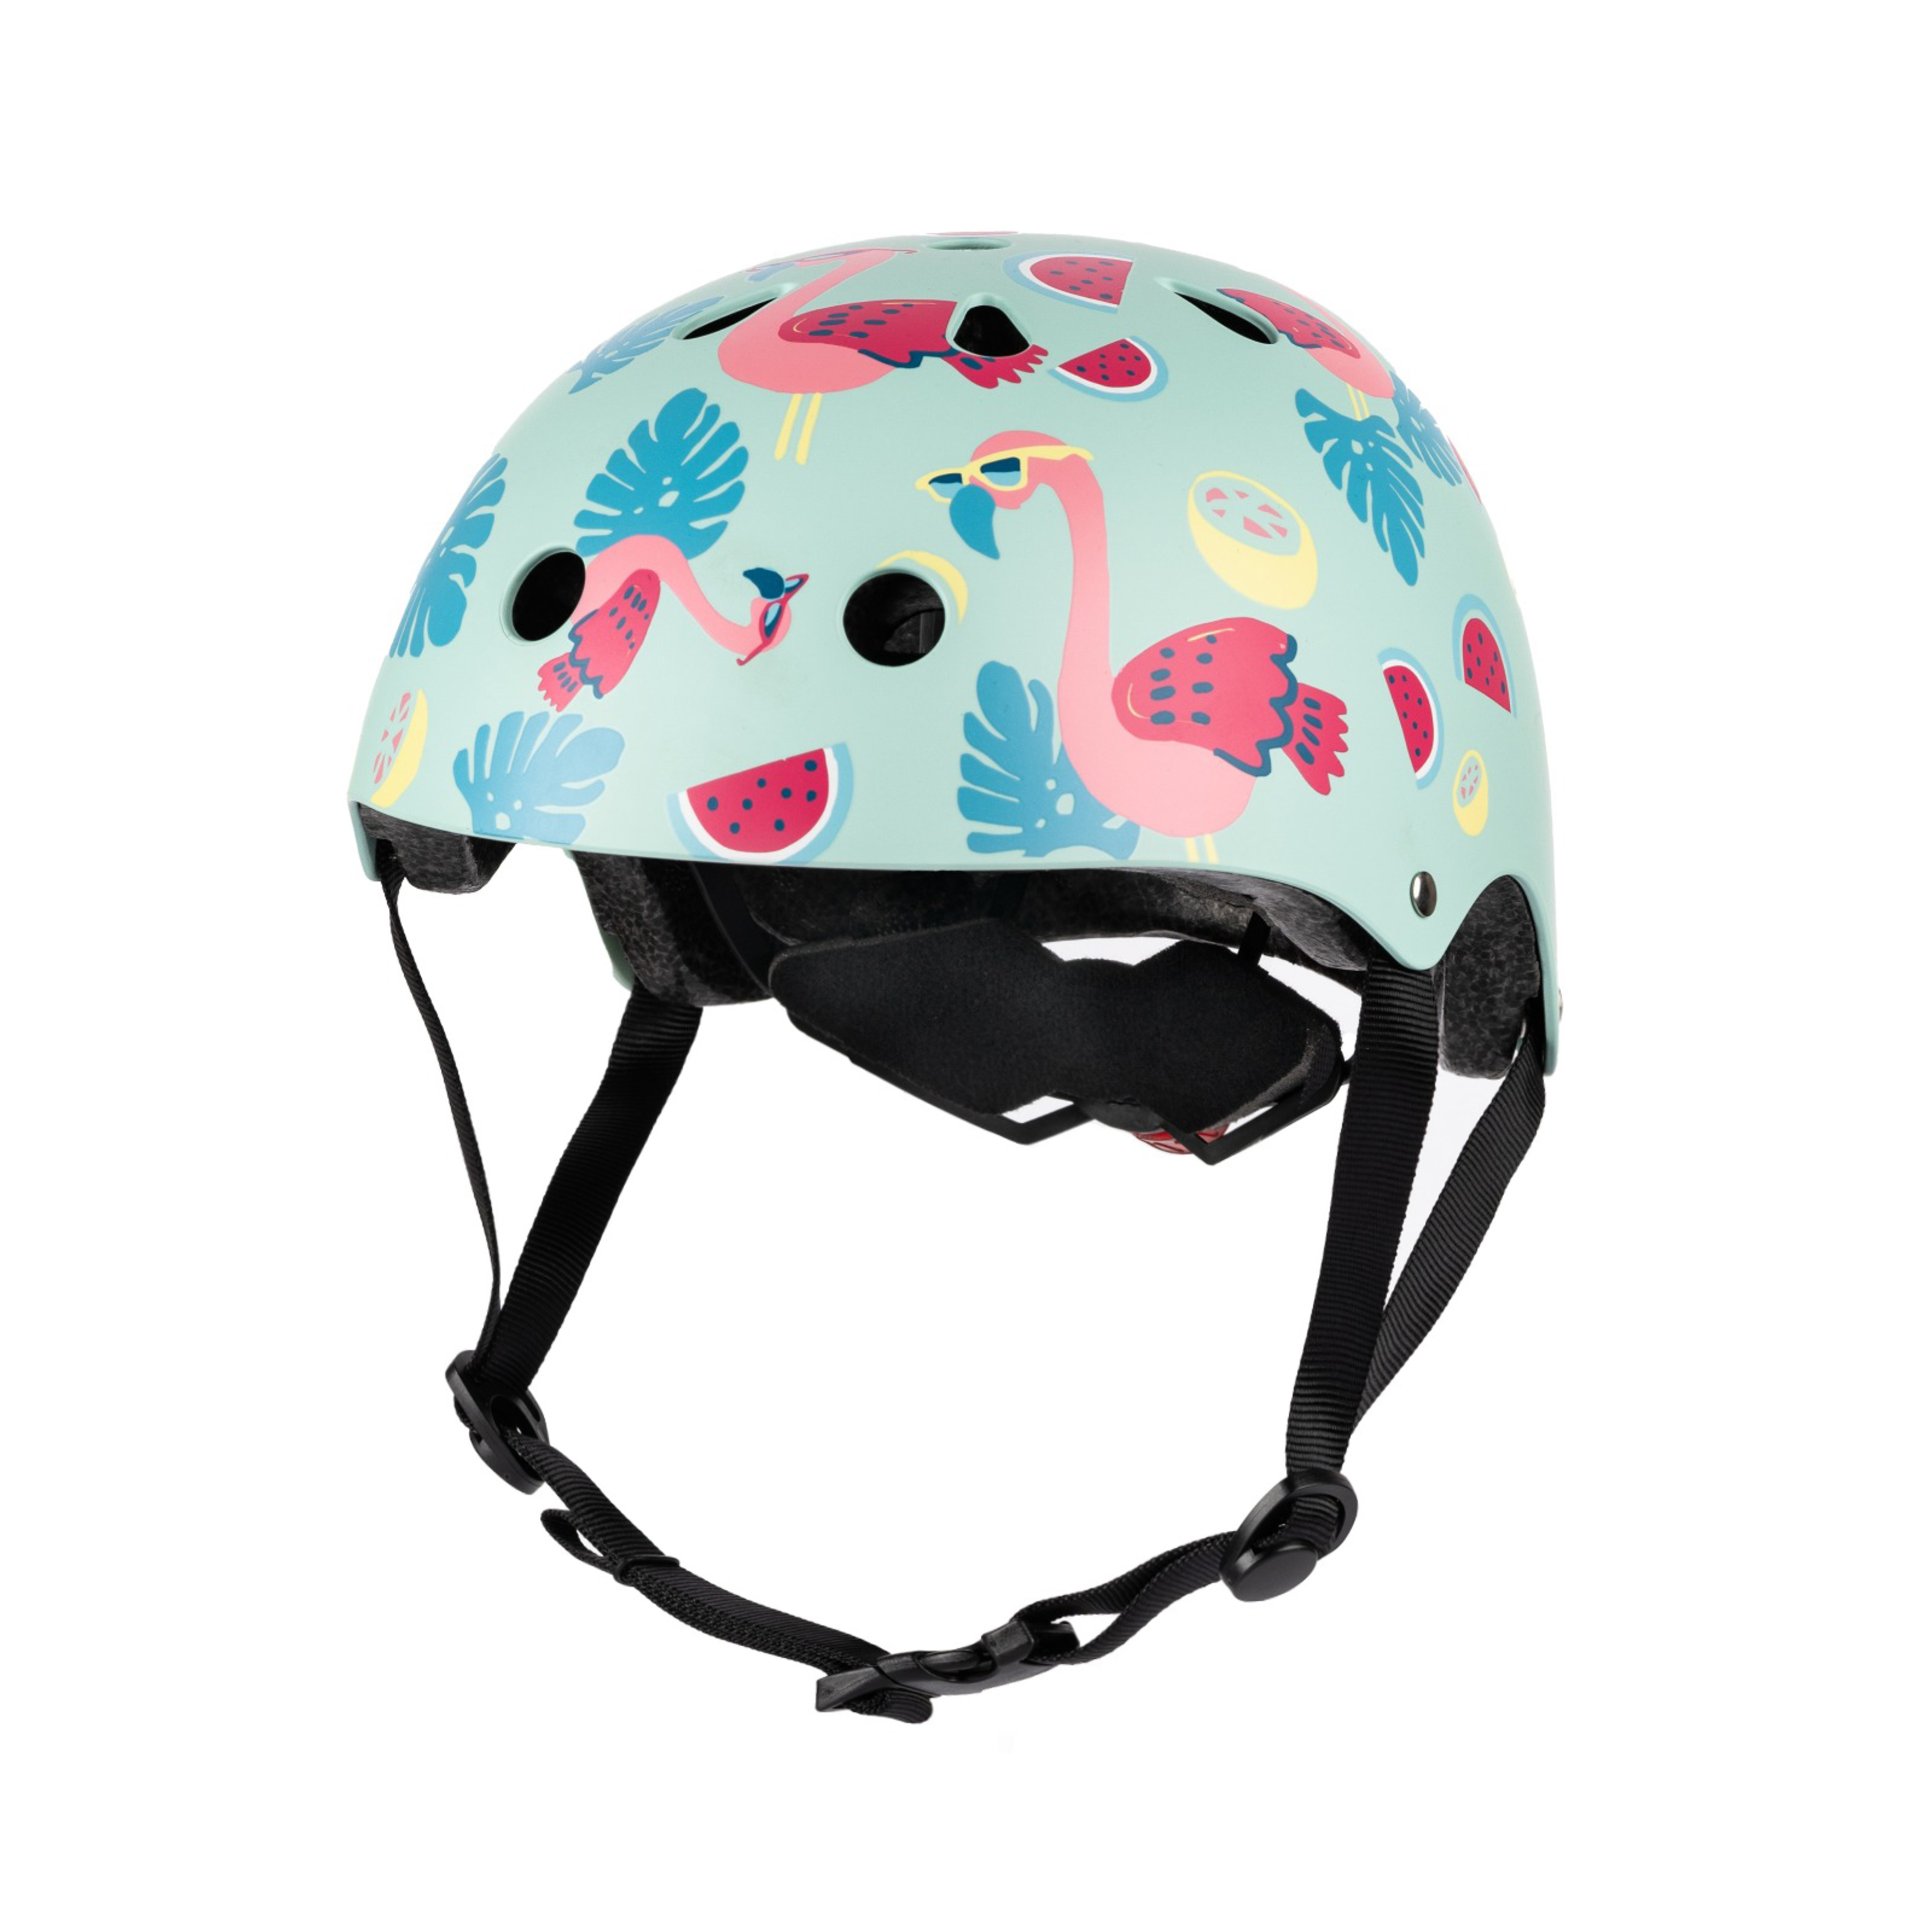 Mini Capacete De Bicicleta Hornit Lids Flamingo - Animal Print - O capacete mais fixe do mundo! | Sport Zone MKP